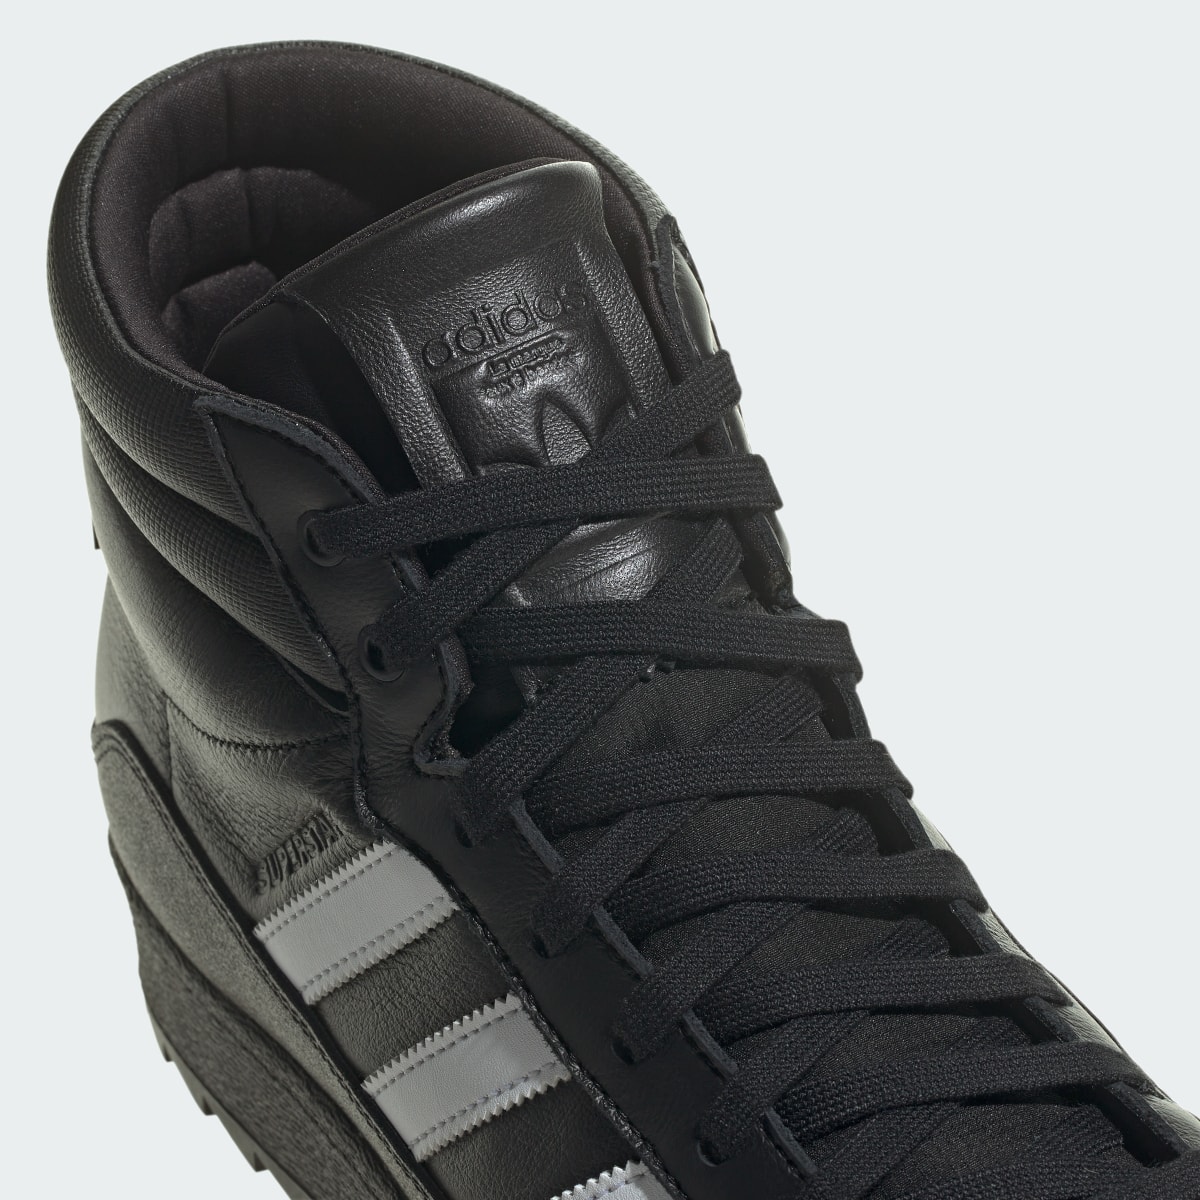 Adidas Superstar GORE-TEX Winter Boots. 9